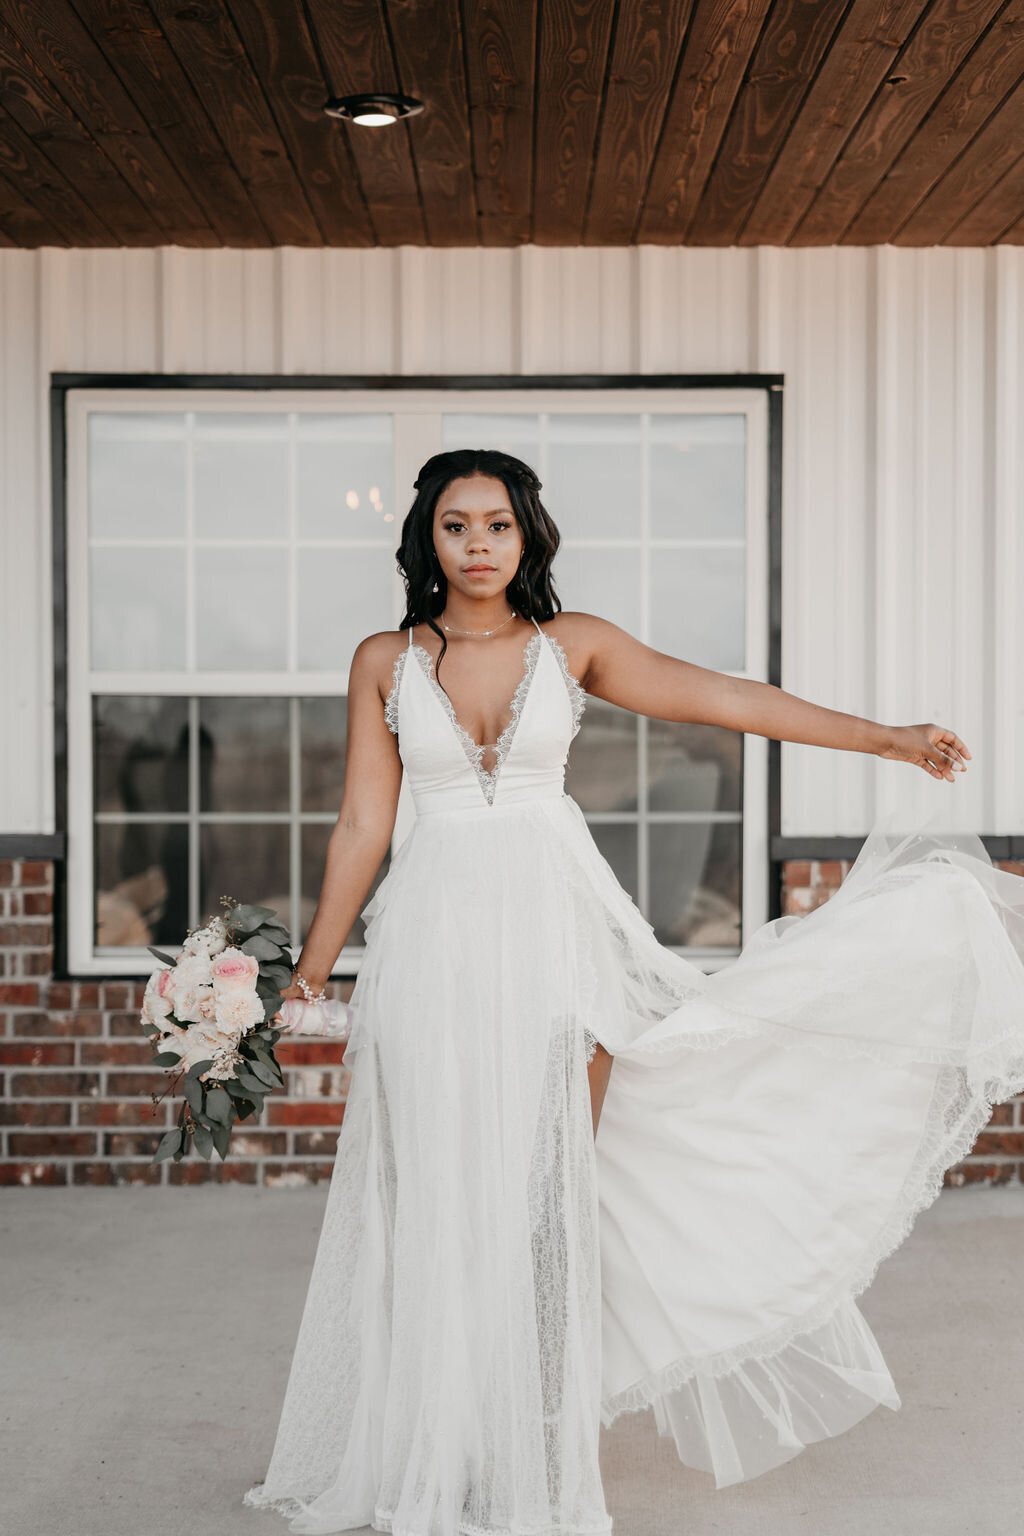 Bride in wedding gown